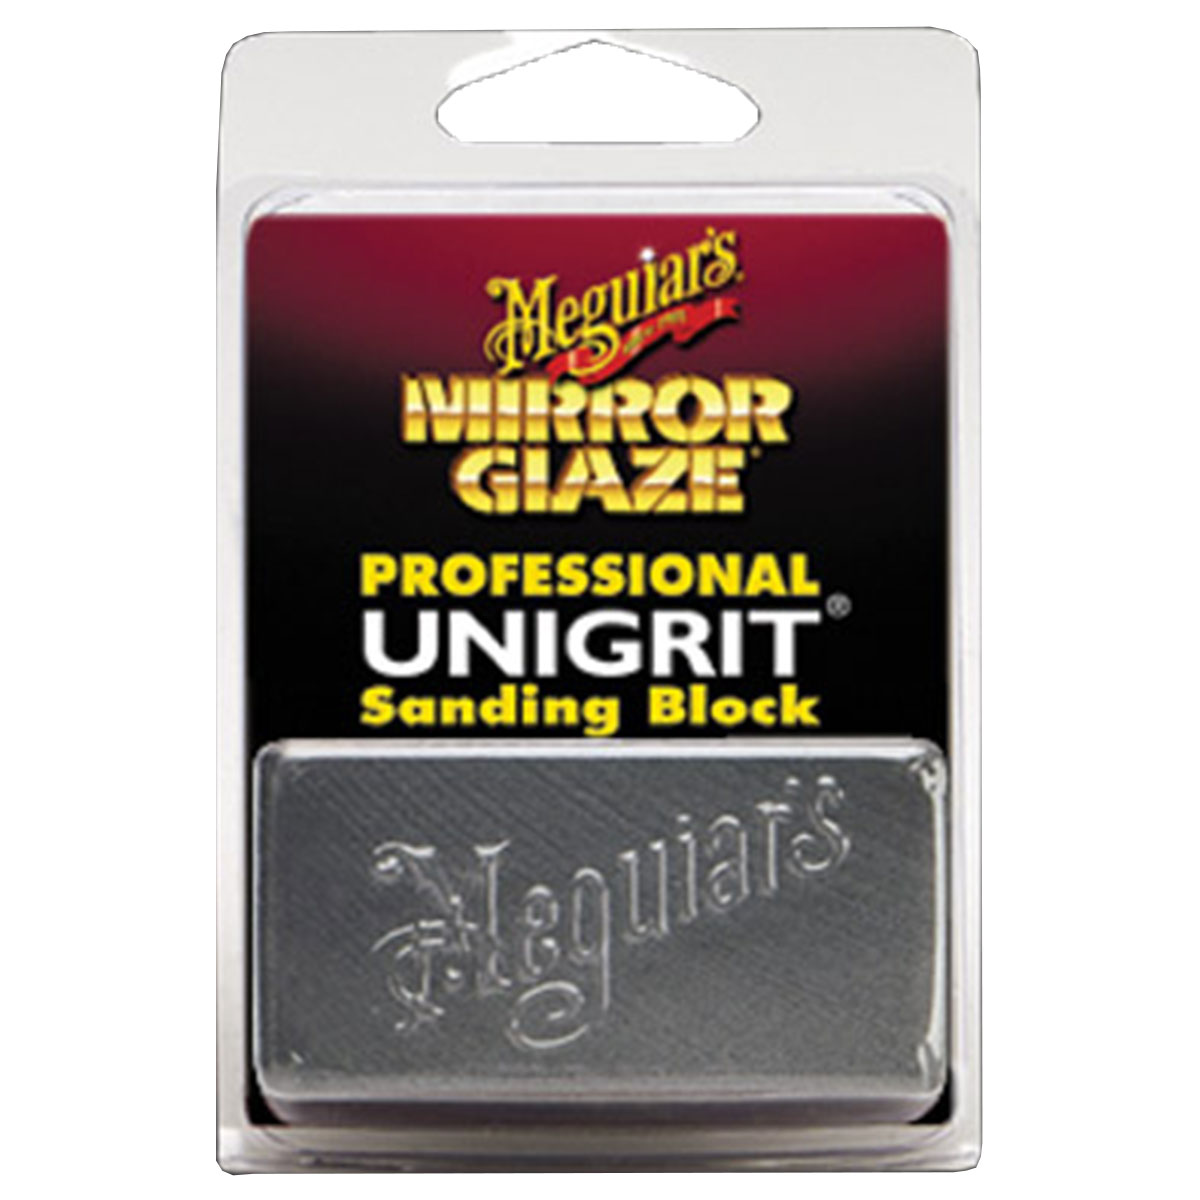 Mirror Glaze Professional Unigrit Sanding Blocks Meguiars